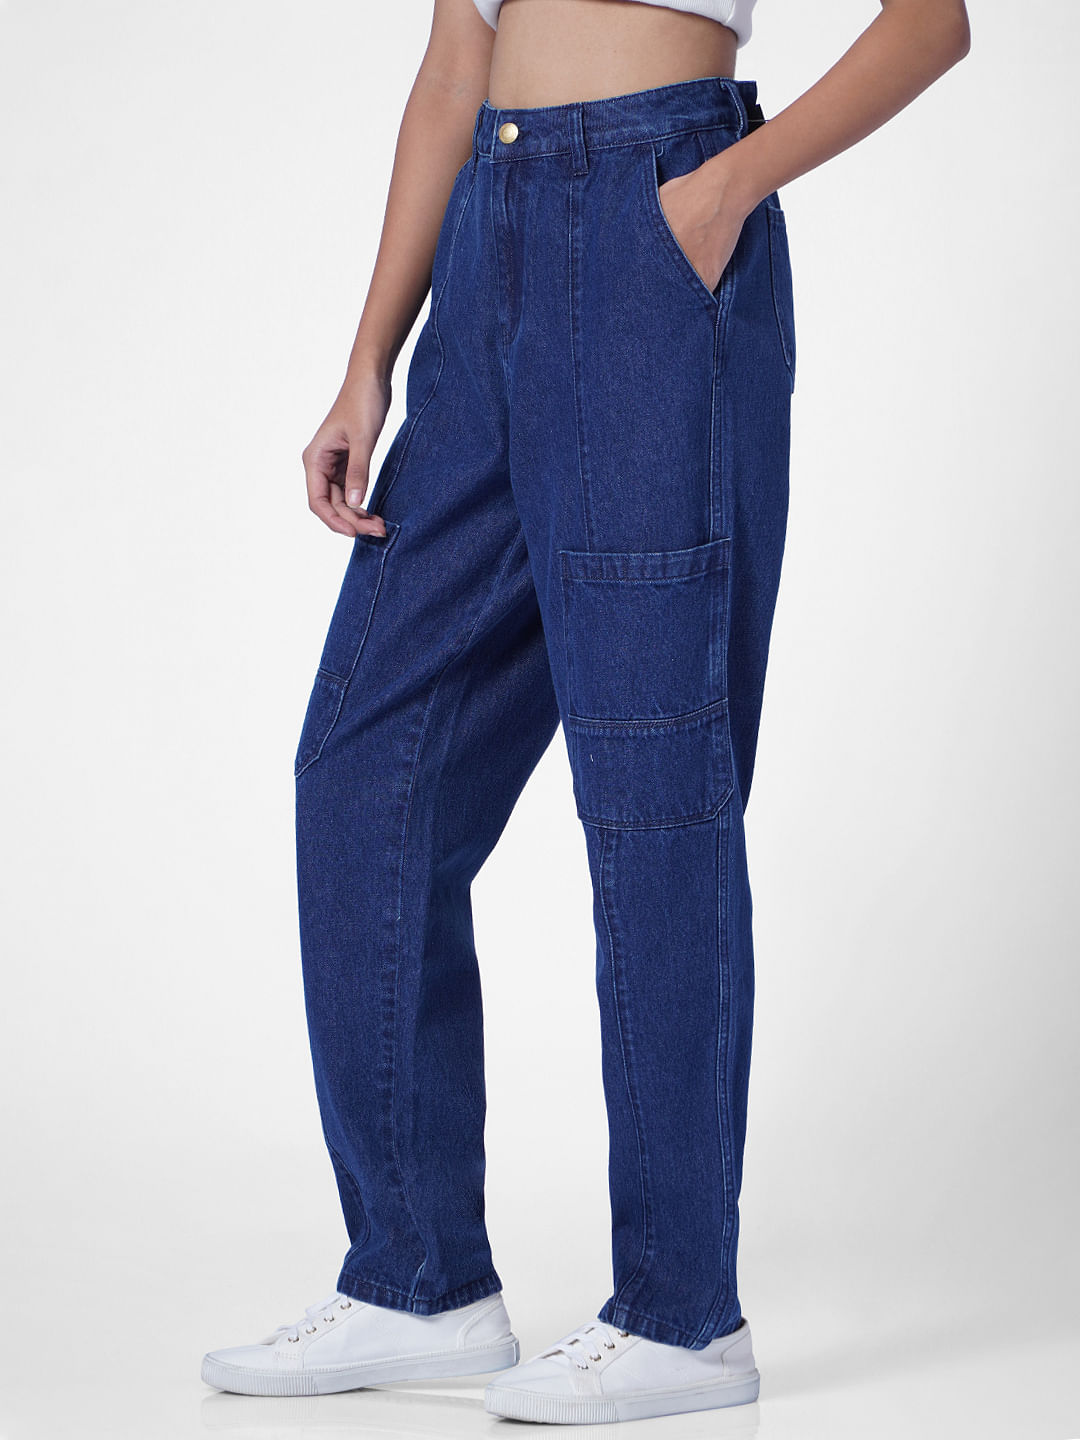 Buy Blue Trousers & Pants for Boys by ZALIO Online | Ajio.com